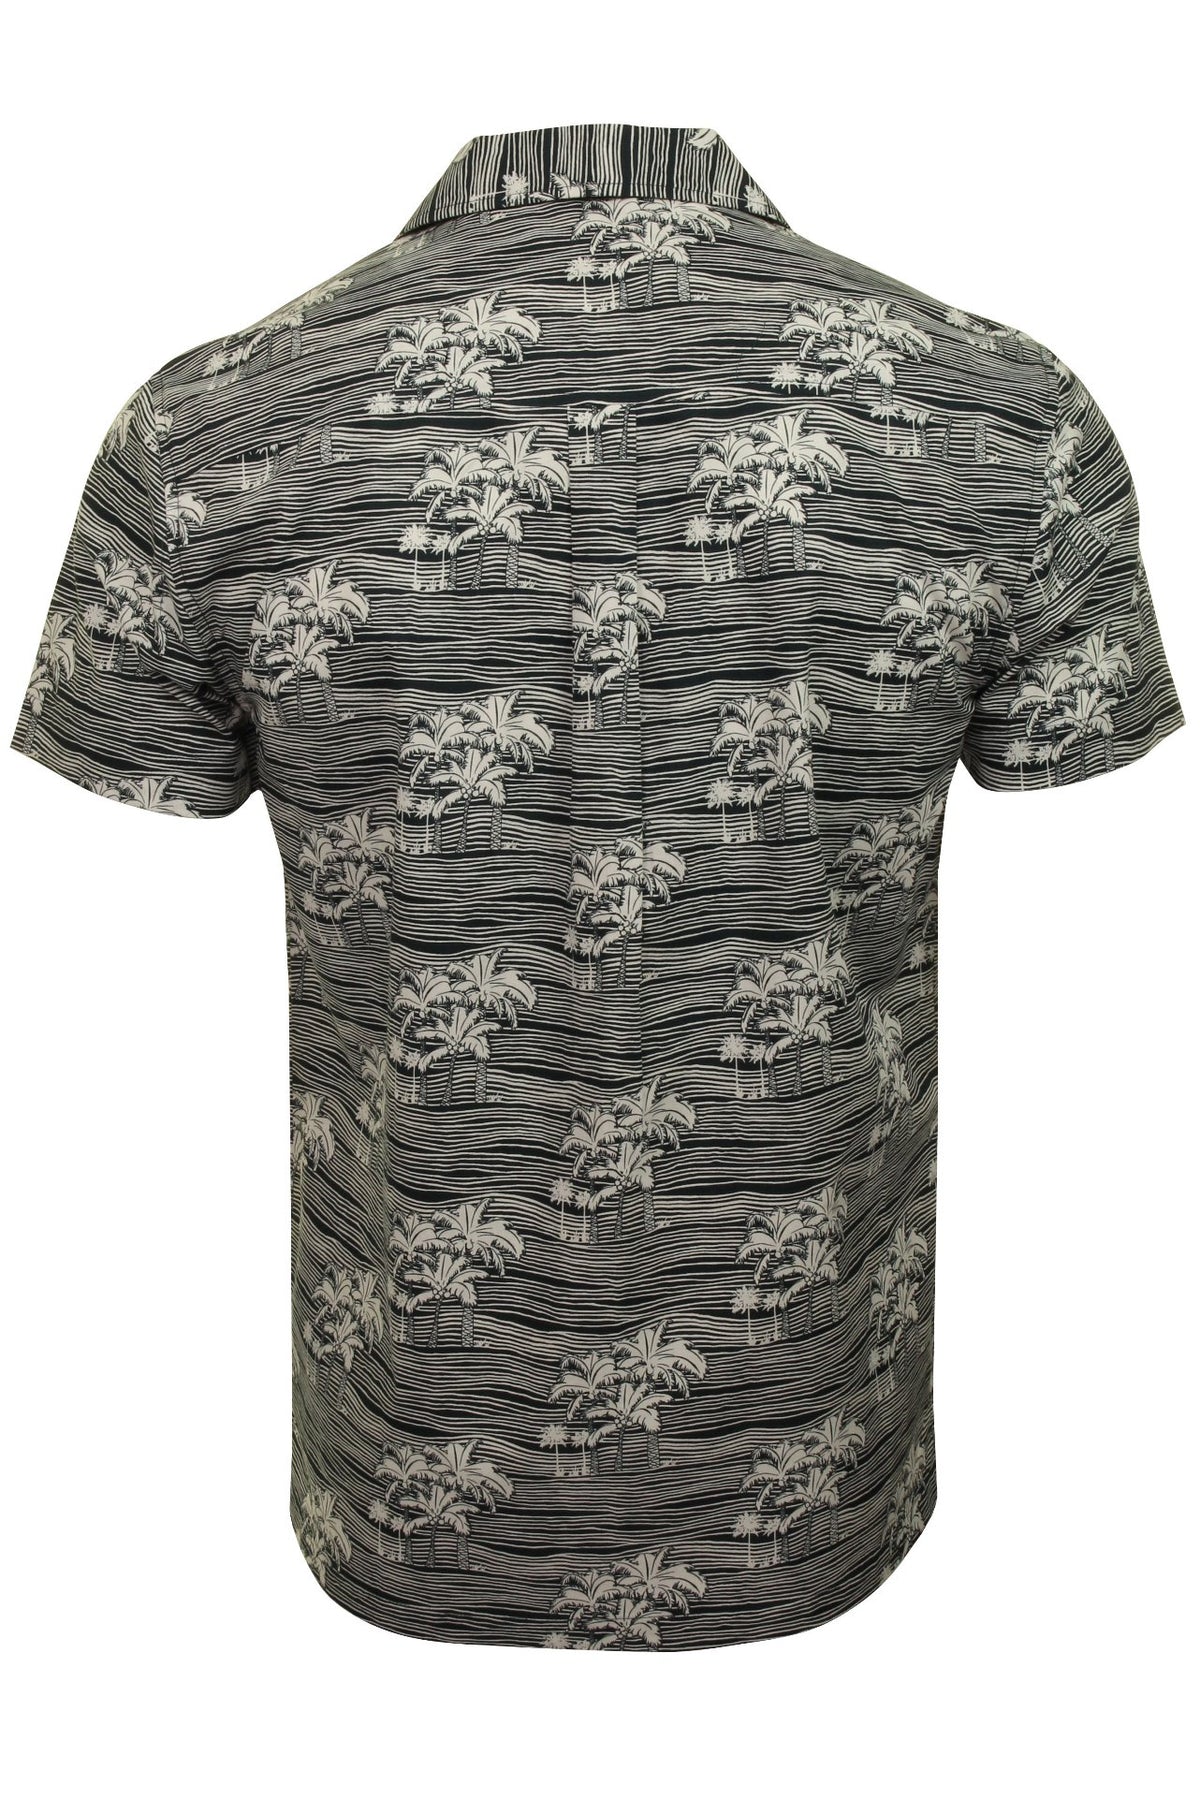 Xact Men's Cuban Collar Hawaiian Shirt - Short Sleeved, 03, Xsh1049, Navy